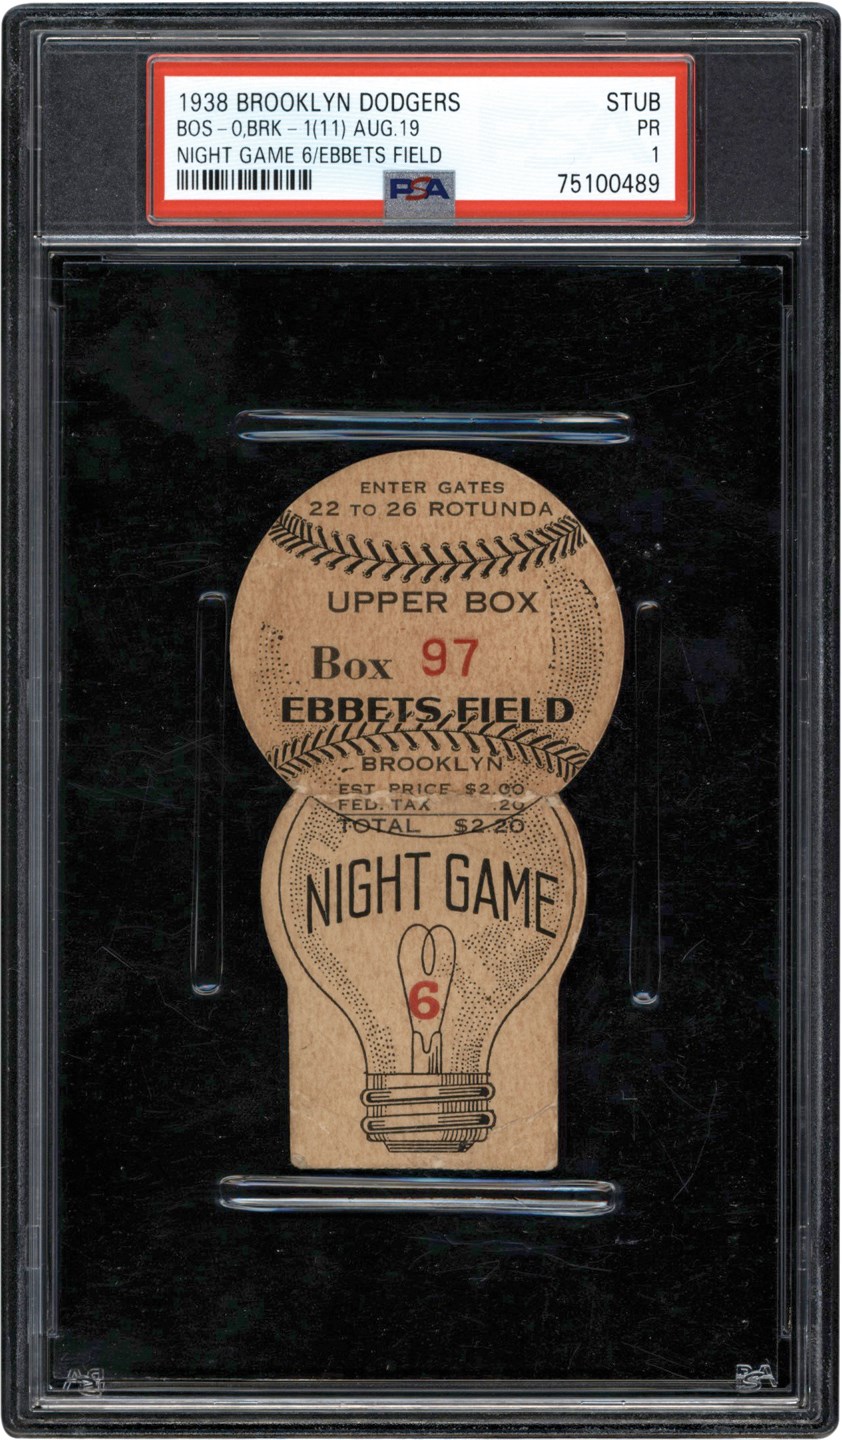 - Rare 1938 Brooklyn Dodgers "Light Bulb" Night Game #6 Ticket Stub PSA PR 1 (Pop 1 of 1 - One Graded Higher)